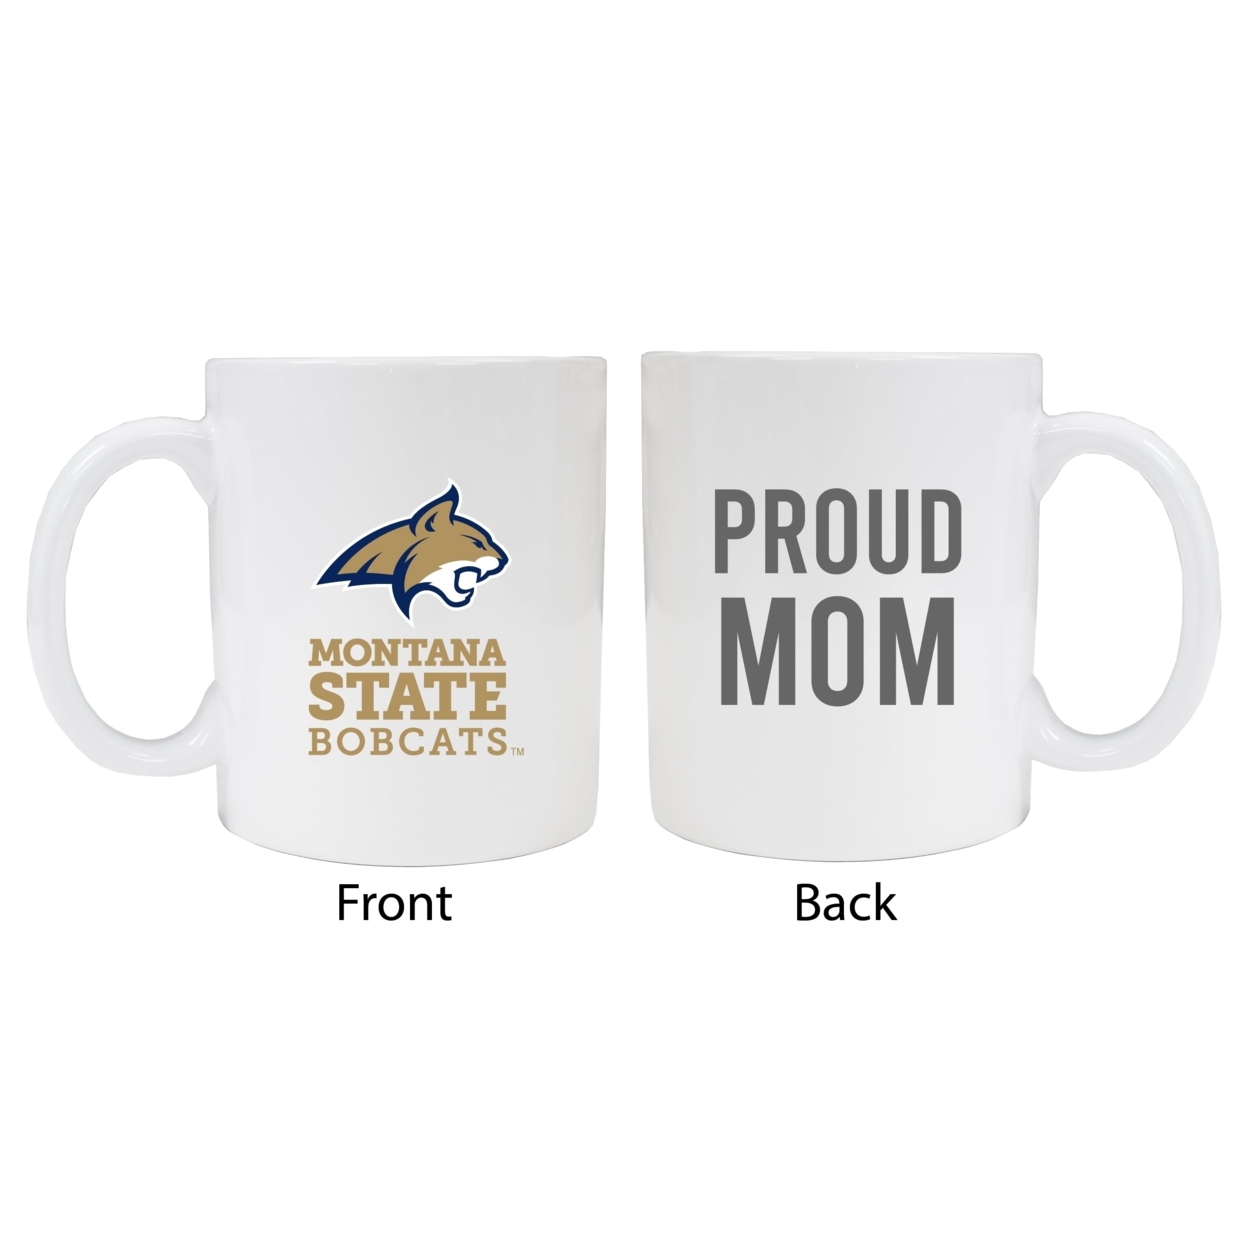 Montana State Bobcats Proud Mom Ceramic Coffee Mug - White